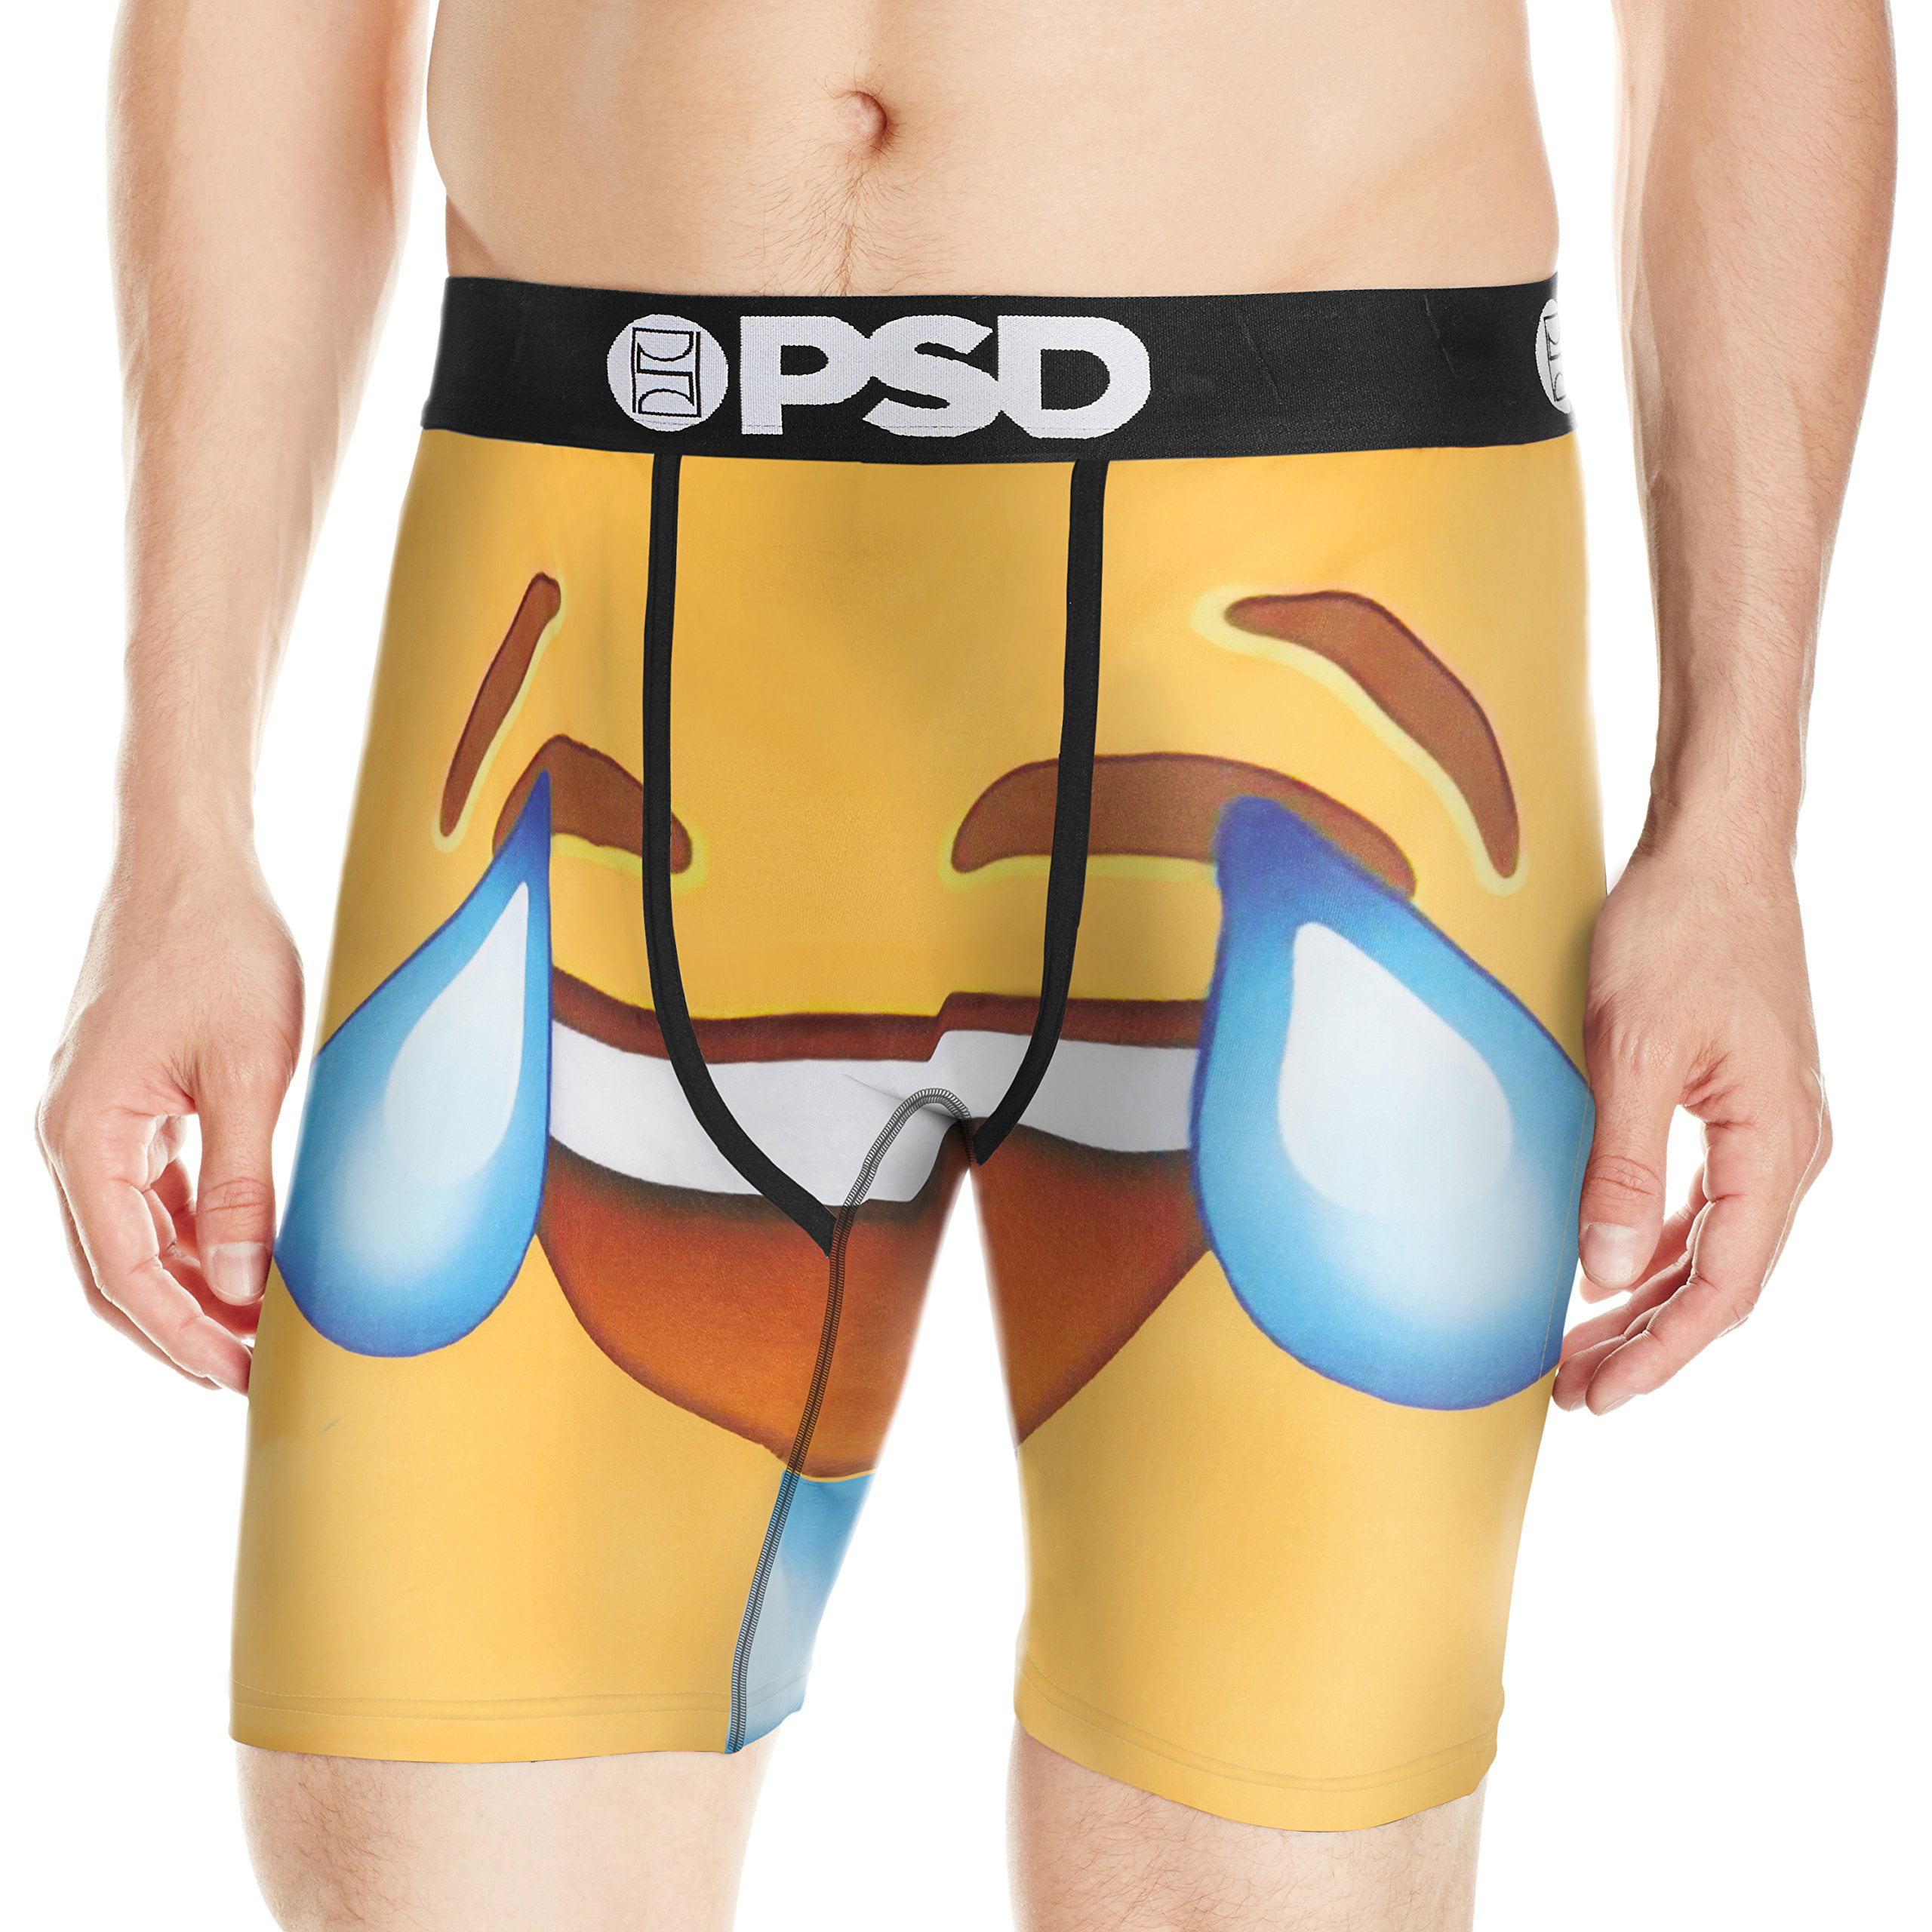 Download PSD - PSD Underwear Men's Psd Premium Boxer Brief (Yellow ...